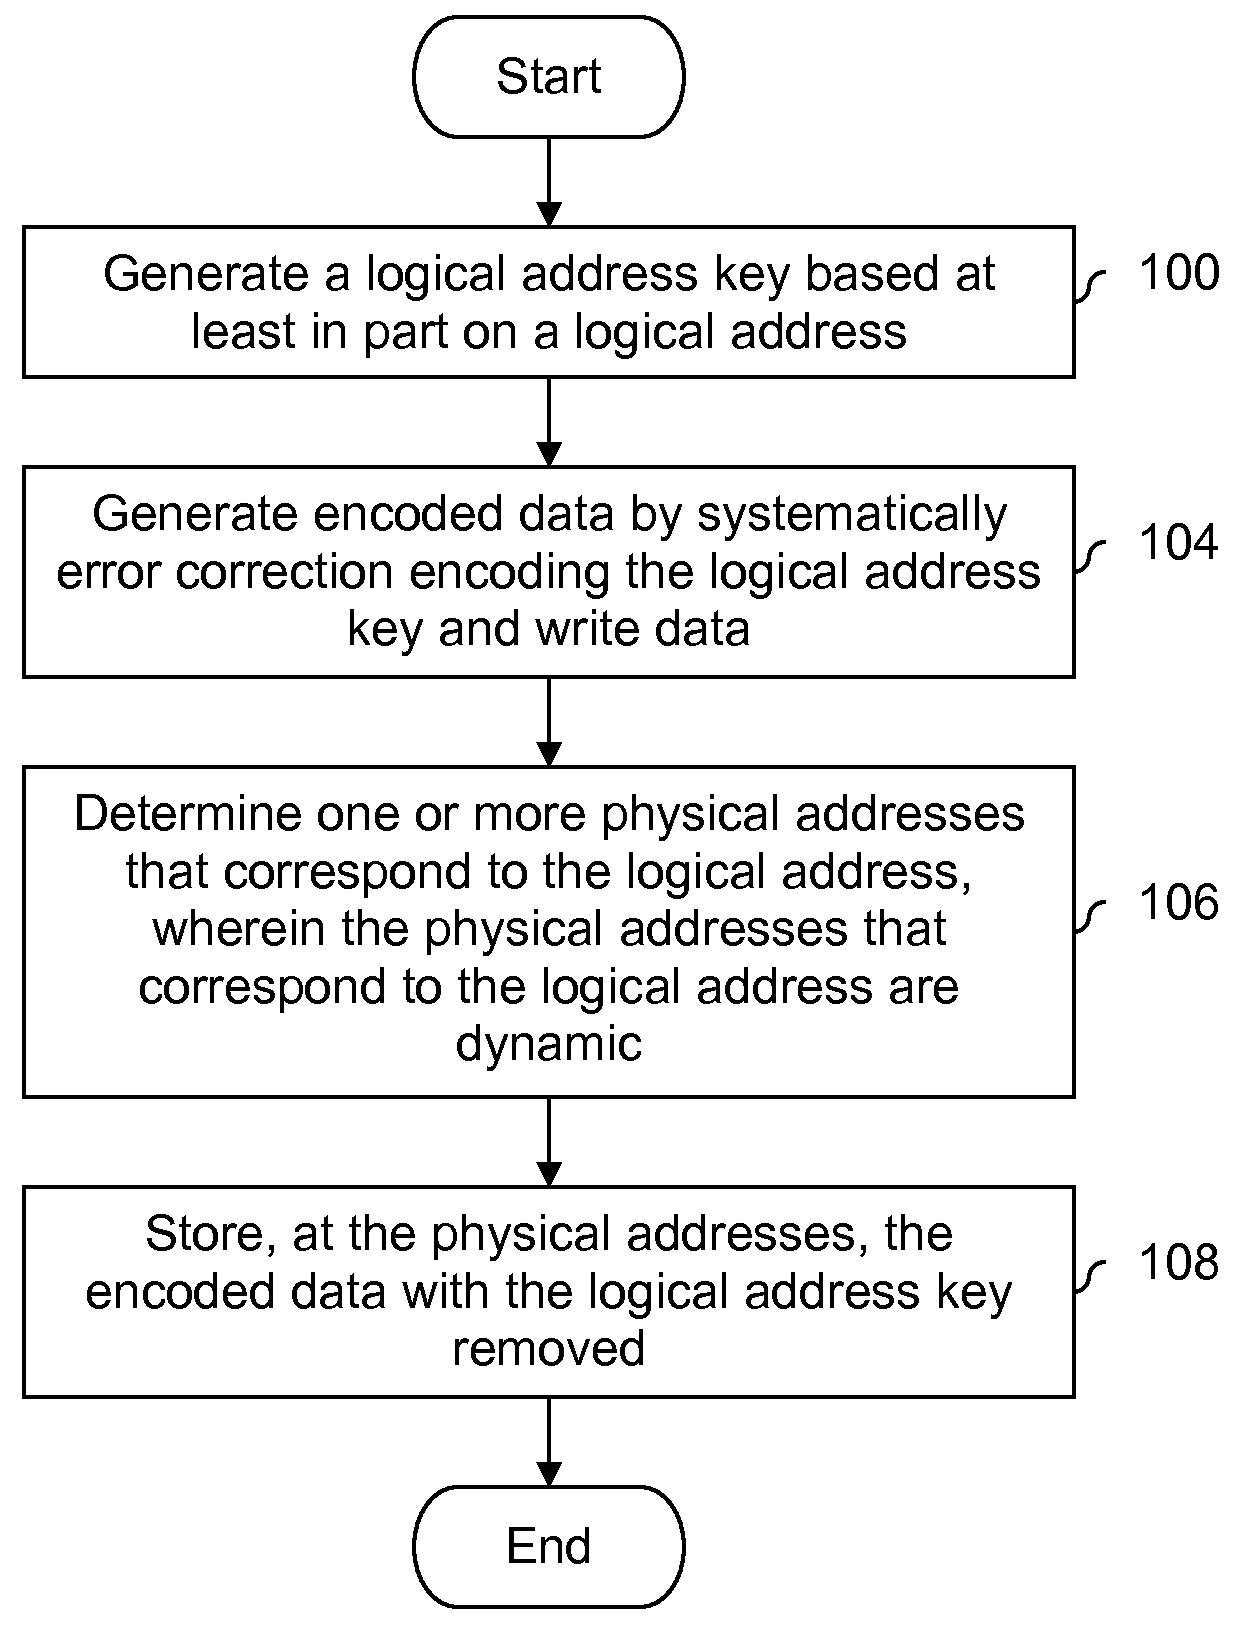 Error detection using a logical address key